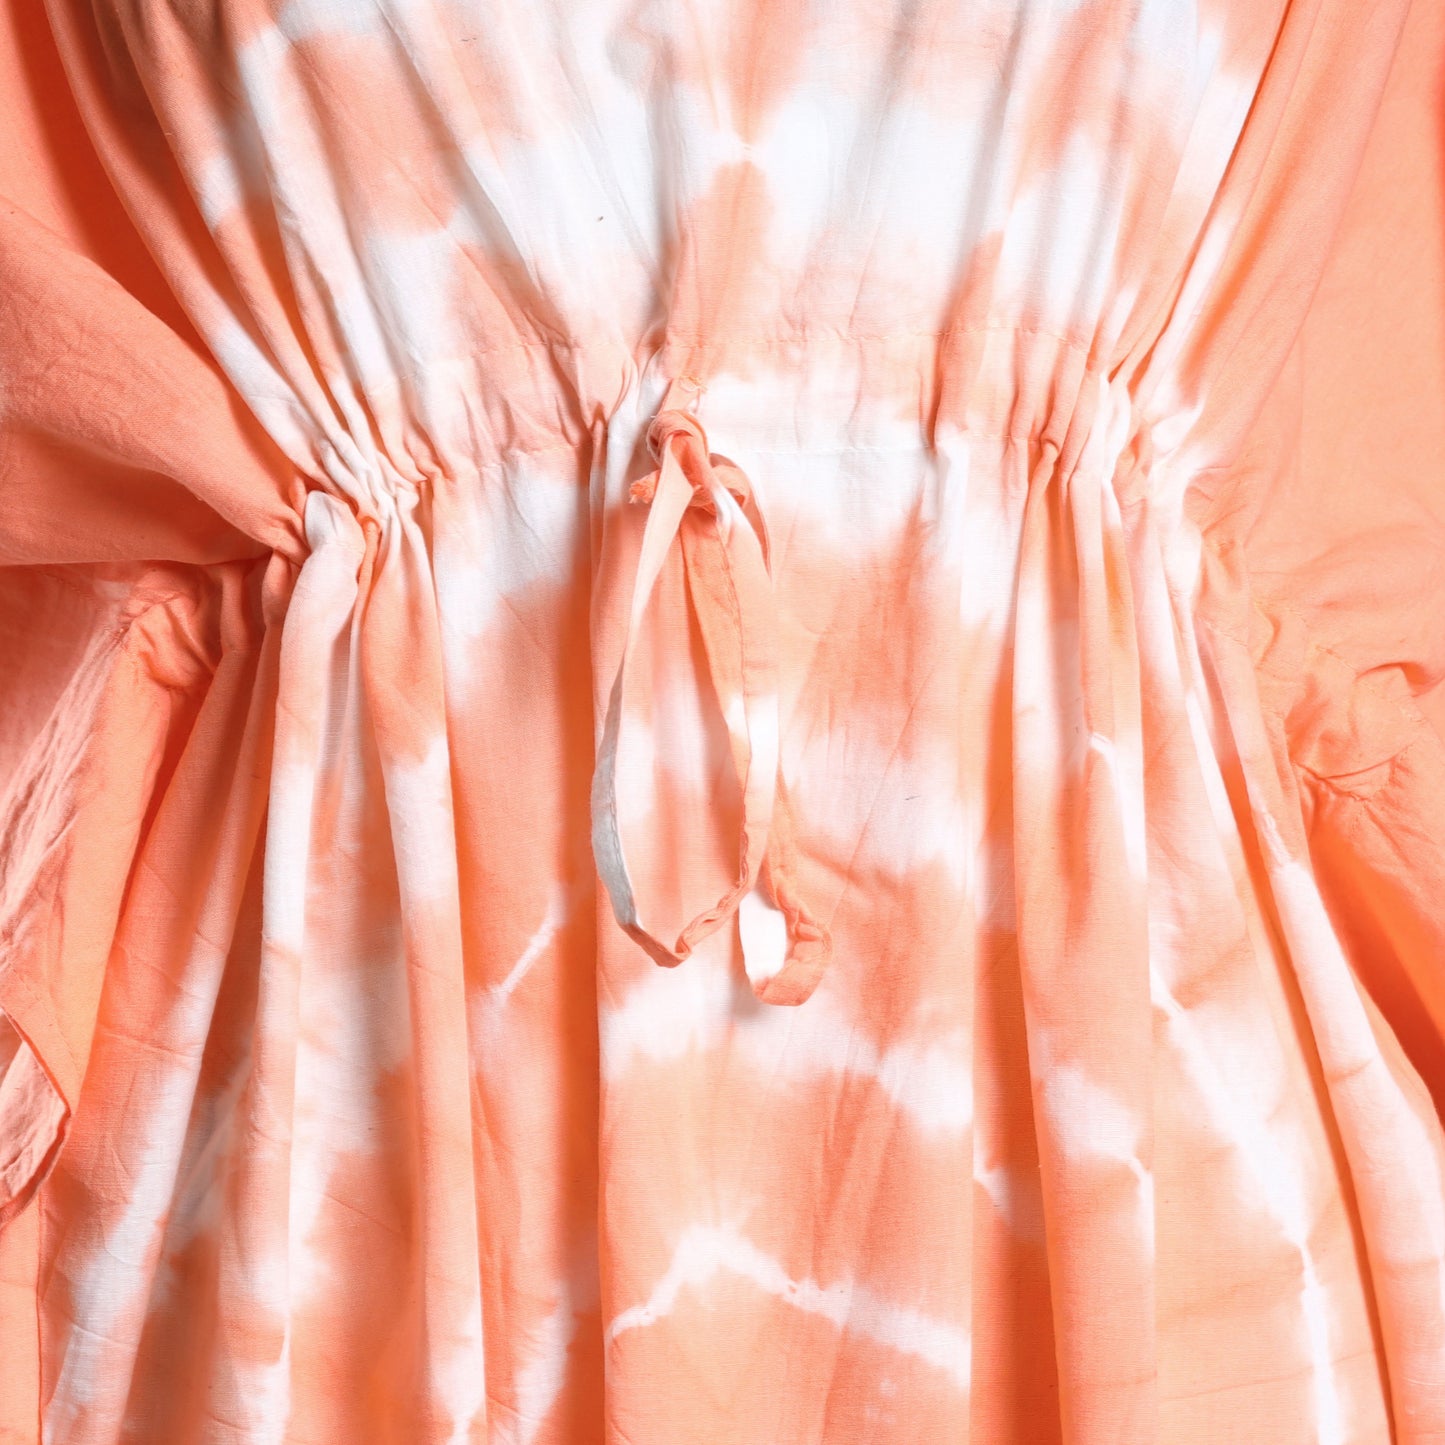 Peach - Shibori Tie-Dye Cotton Kaftan with Tie-Up Waist